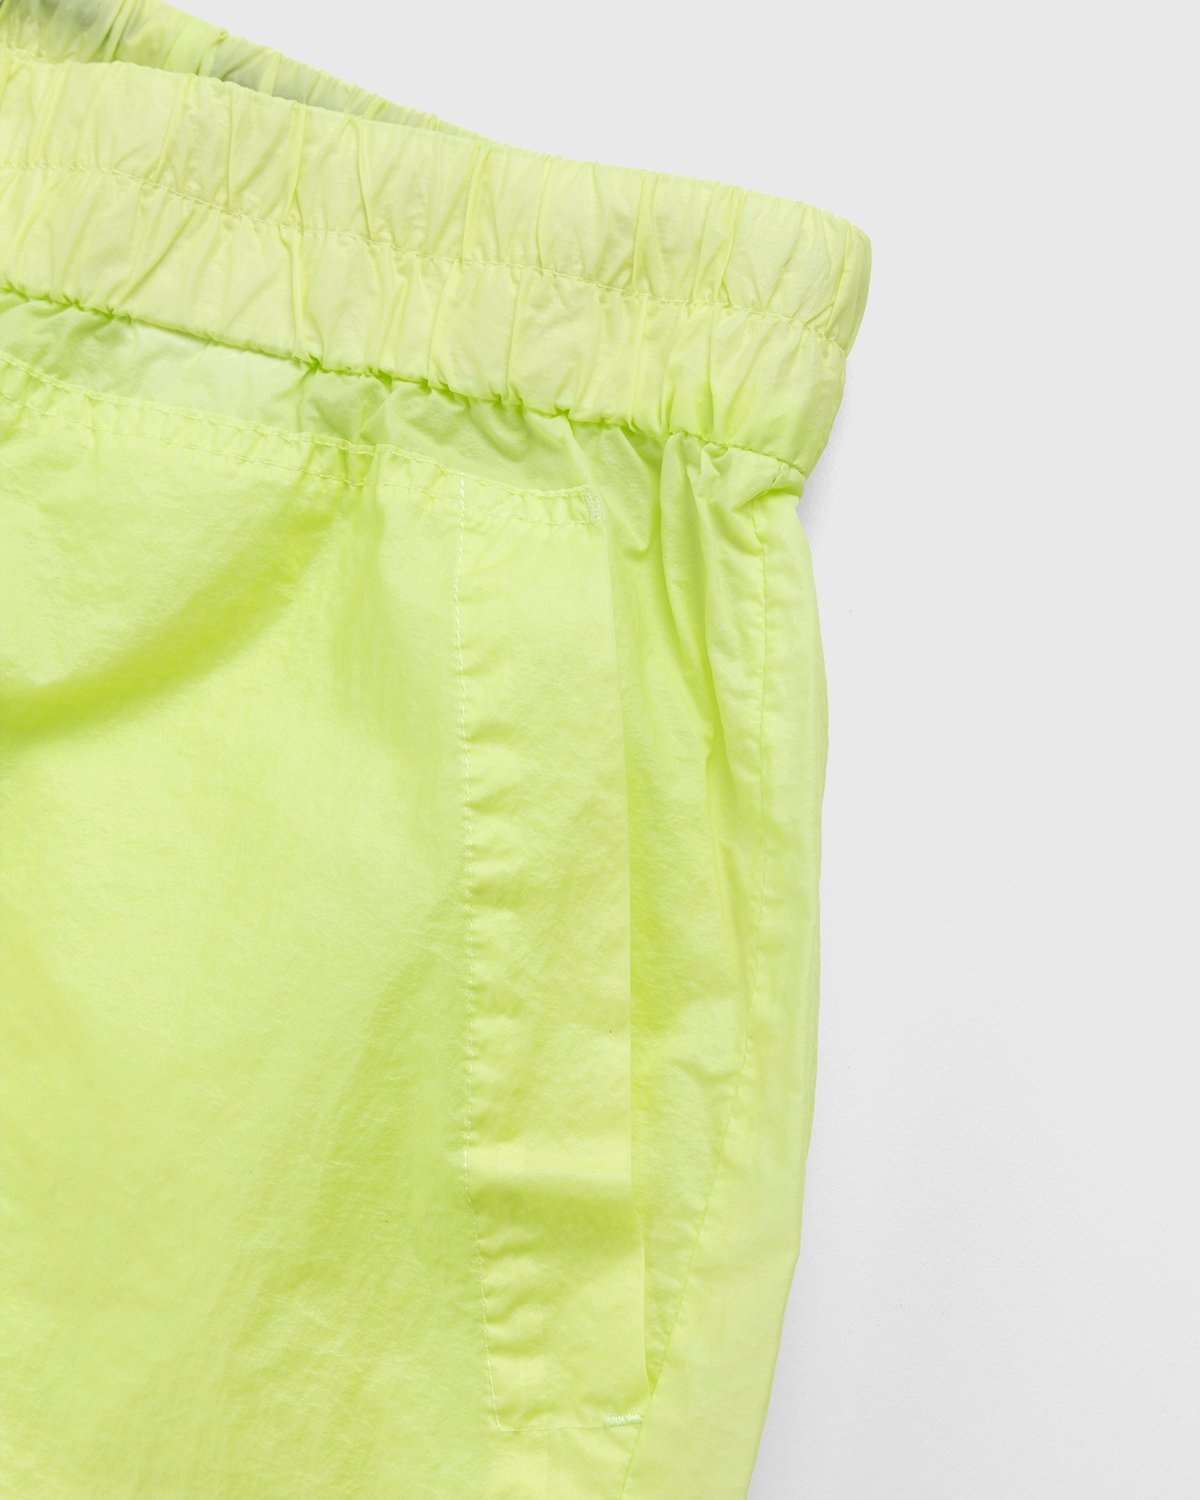 Dries van Noten – Pooles Shorts Lime - Shorts - Green - Image 4